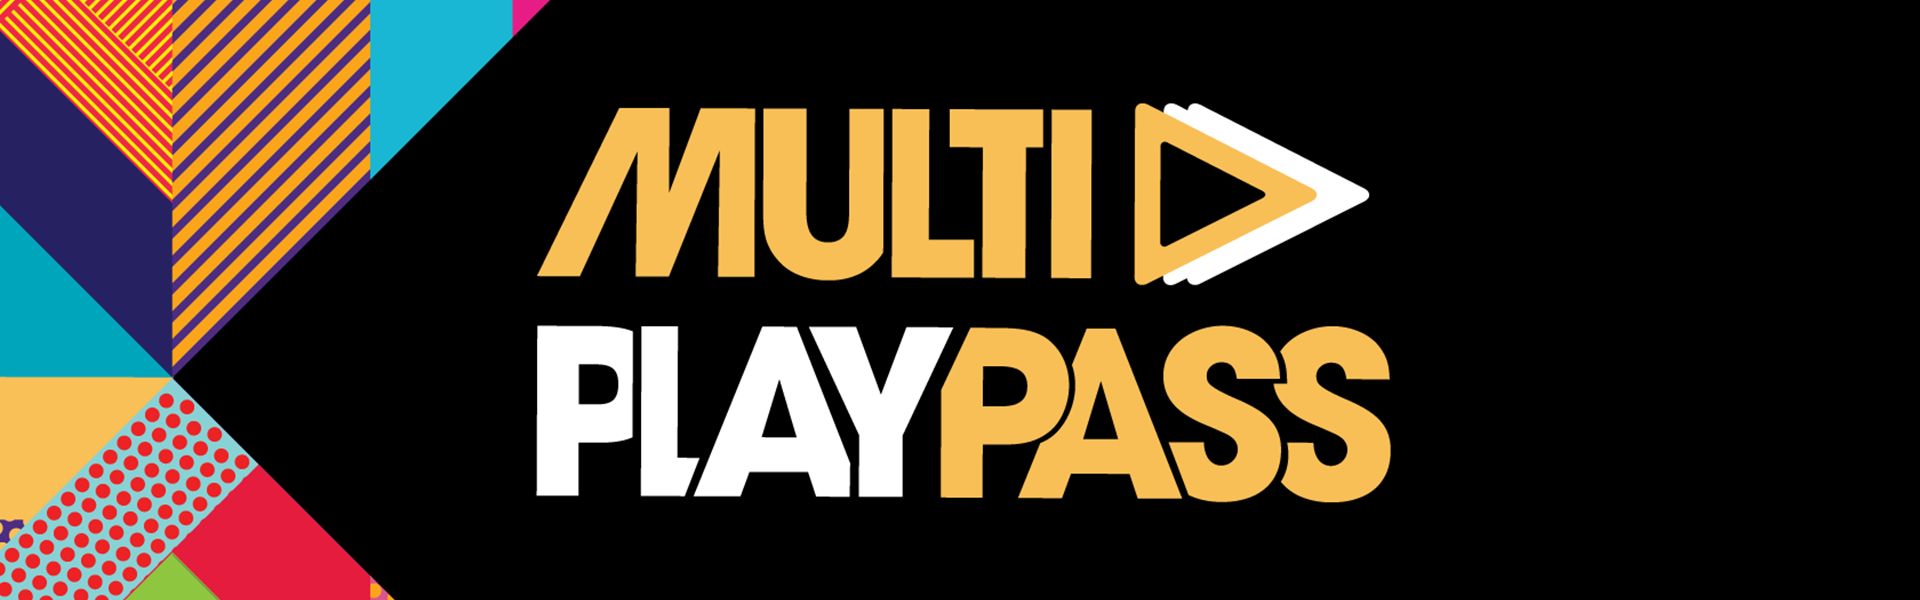 Multi-Play Passes